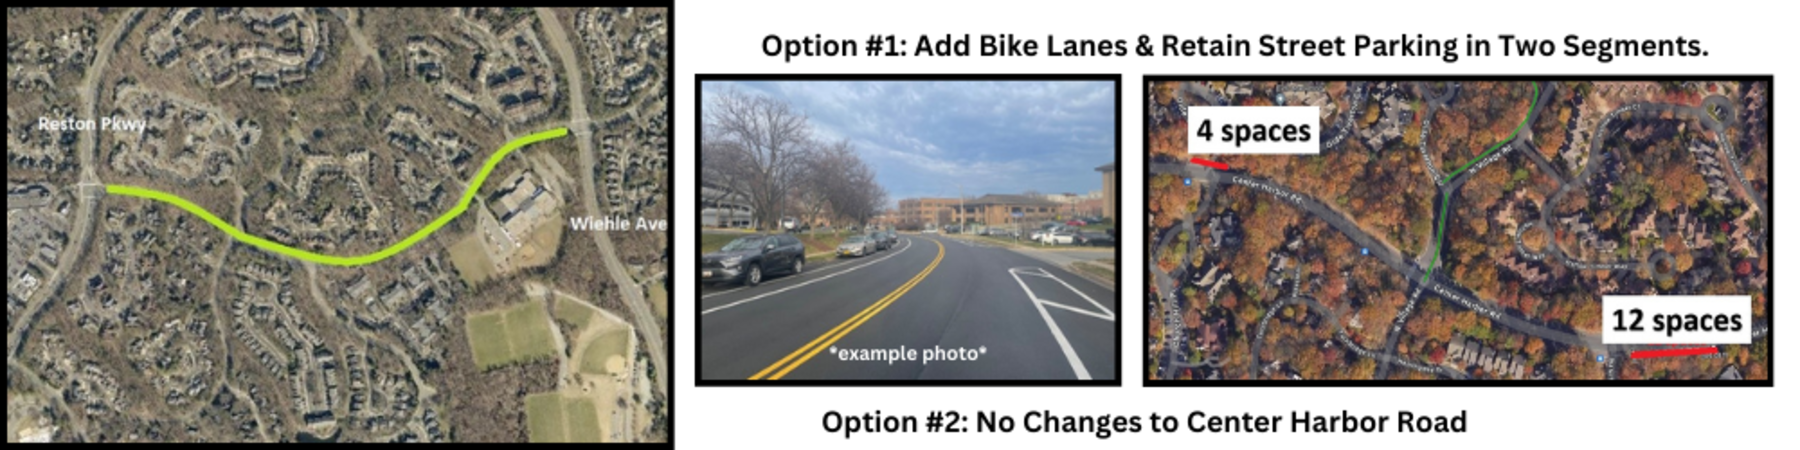 Center Harbor Road bike lanes and street parking proposal.